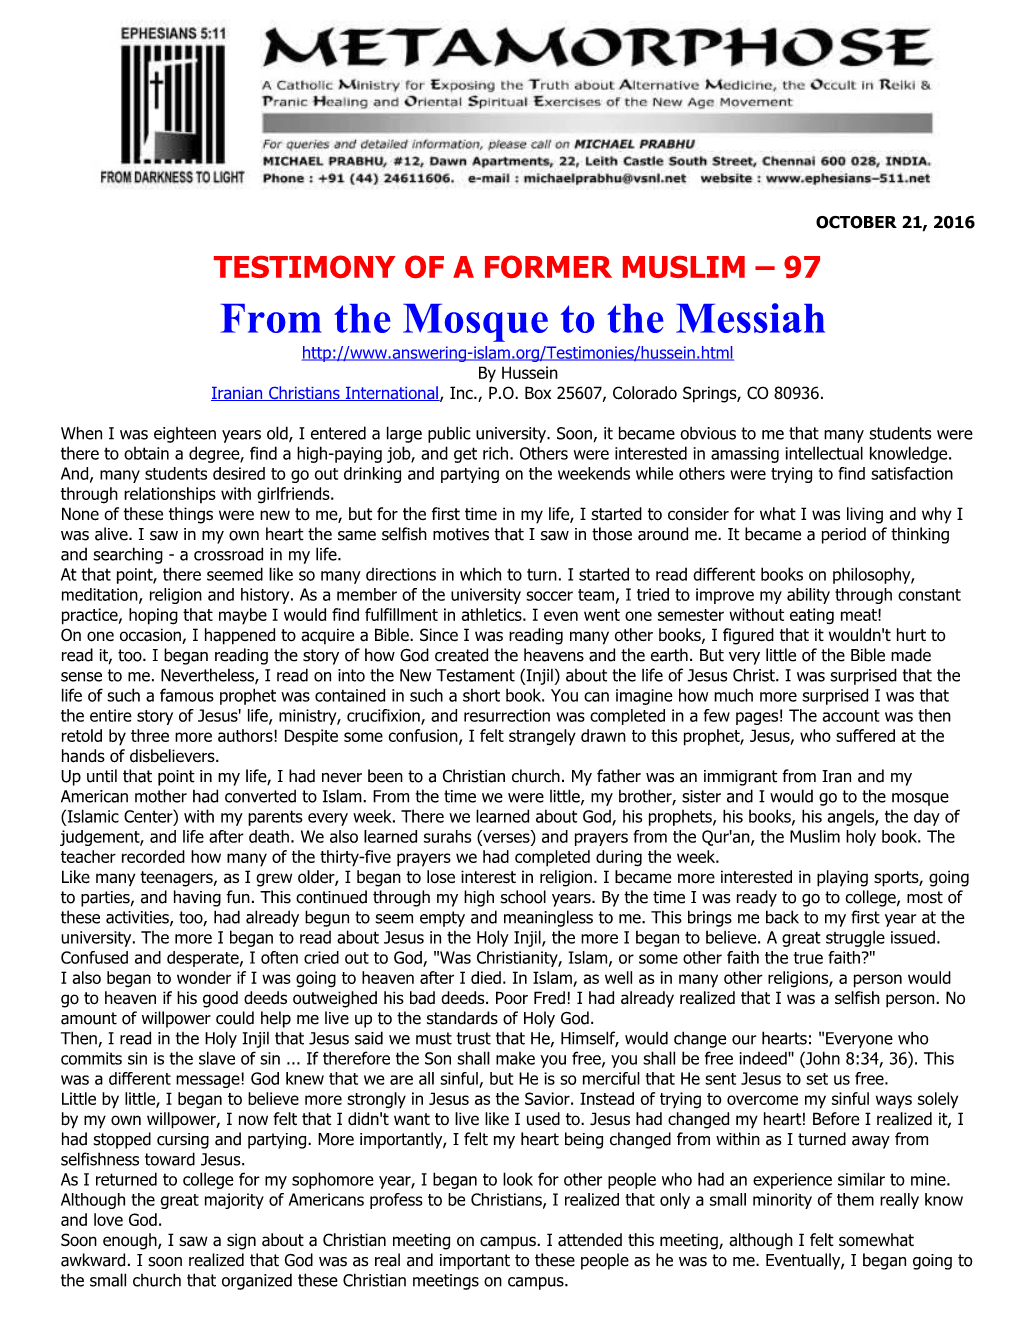 Testimony of a Former Muslim 97